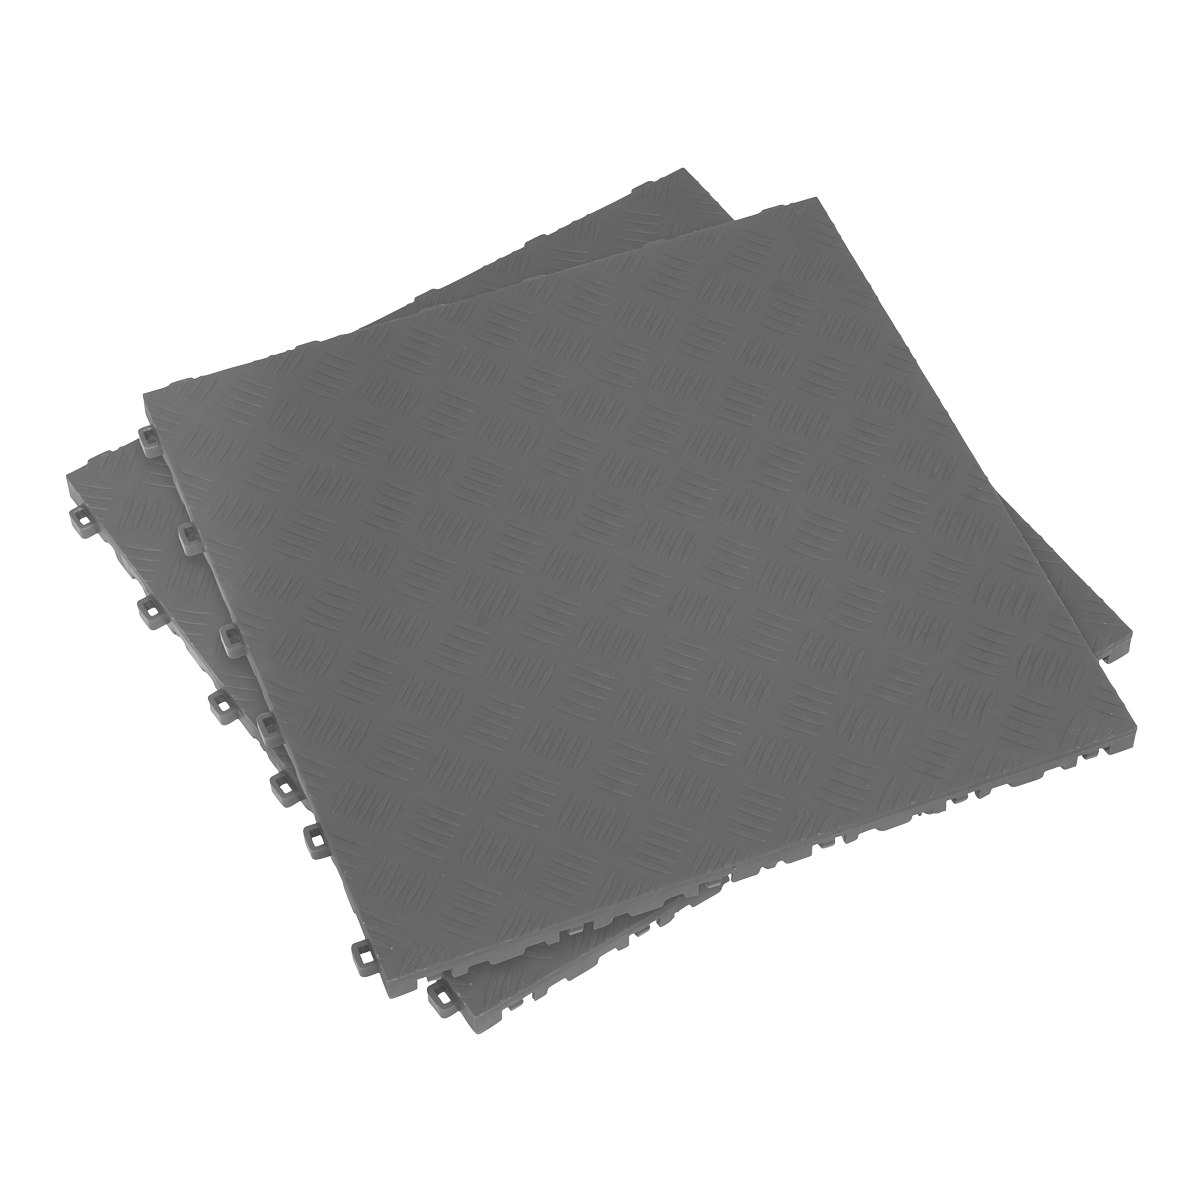 Sealey Polypropylene Floor Tile 400 x 400mm - Grey Treadplate - Pack of 9 FT3G